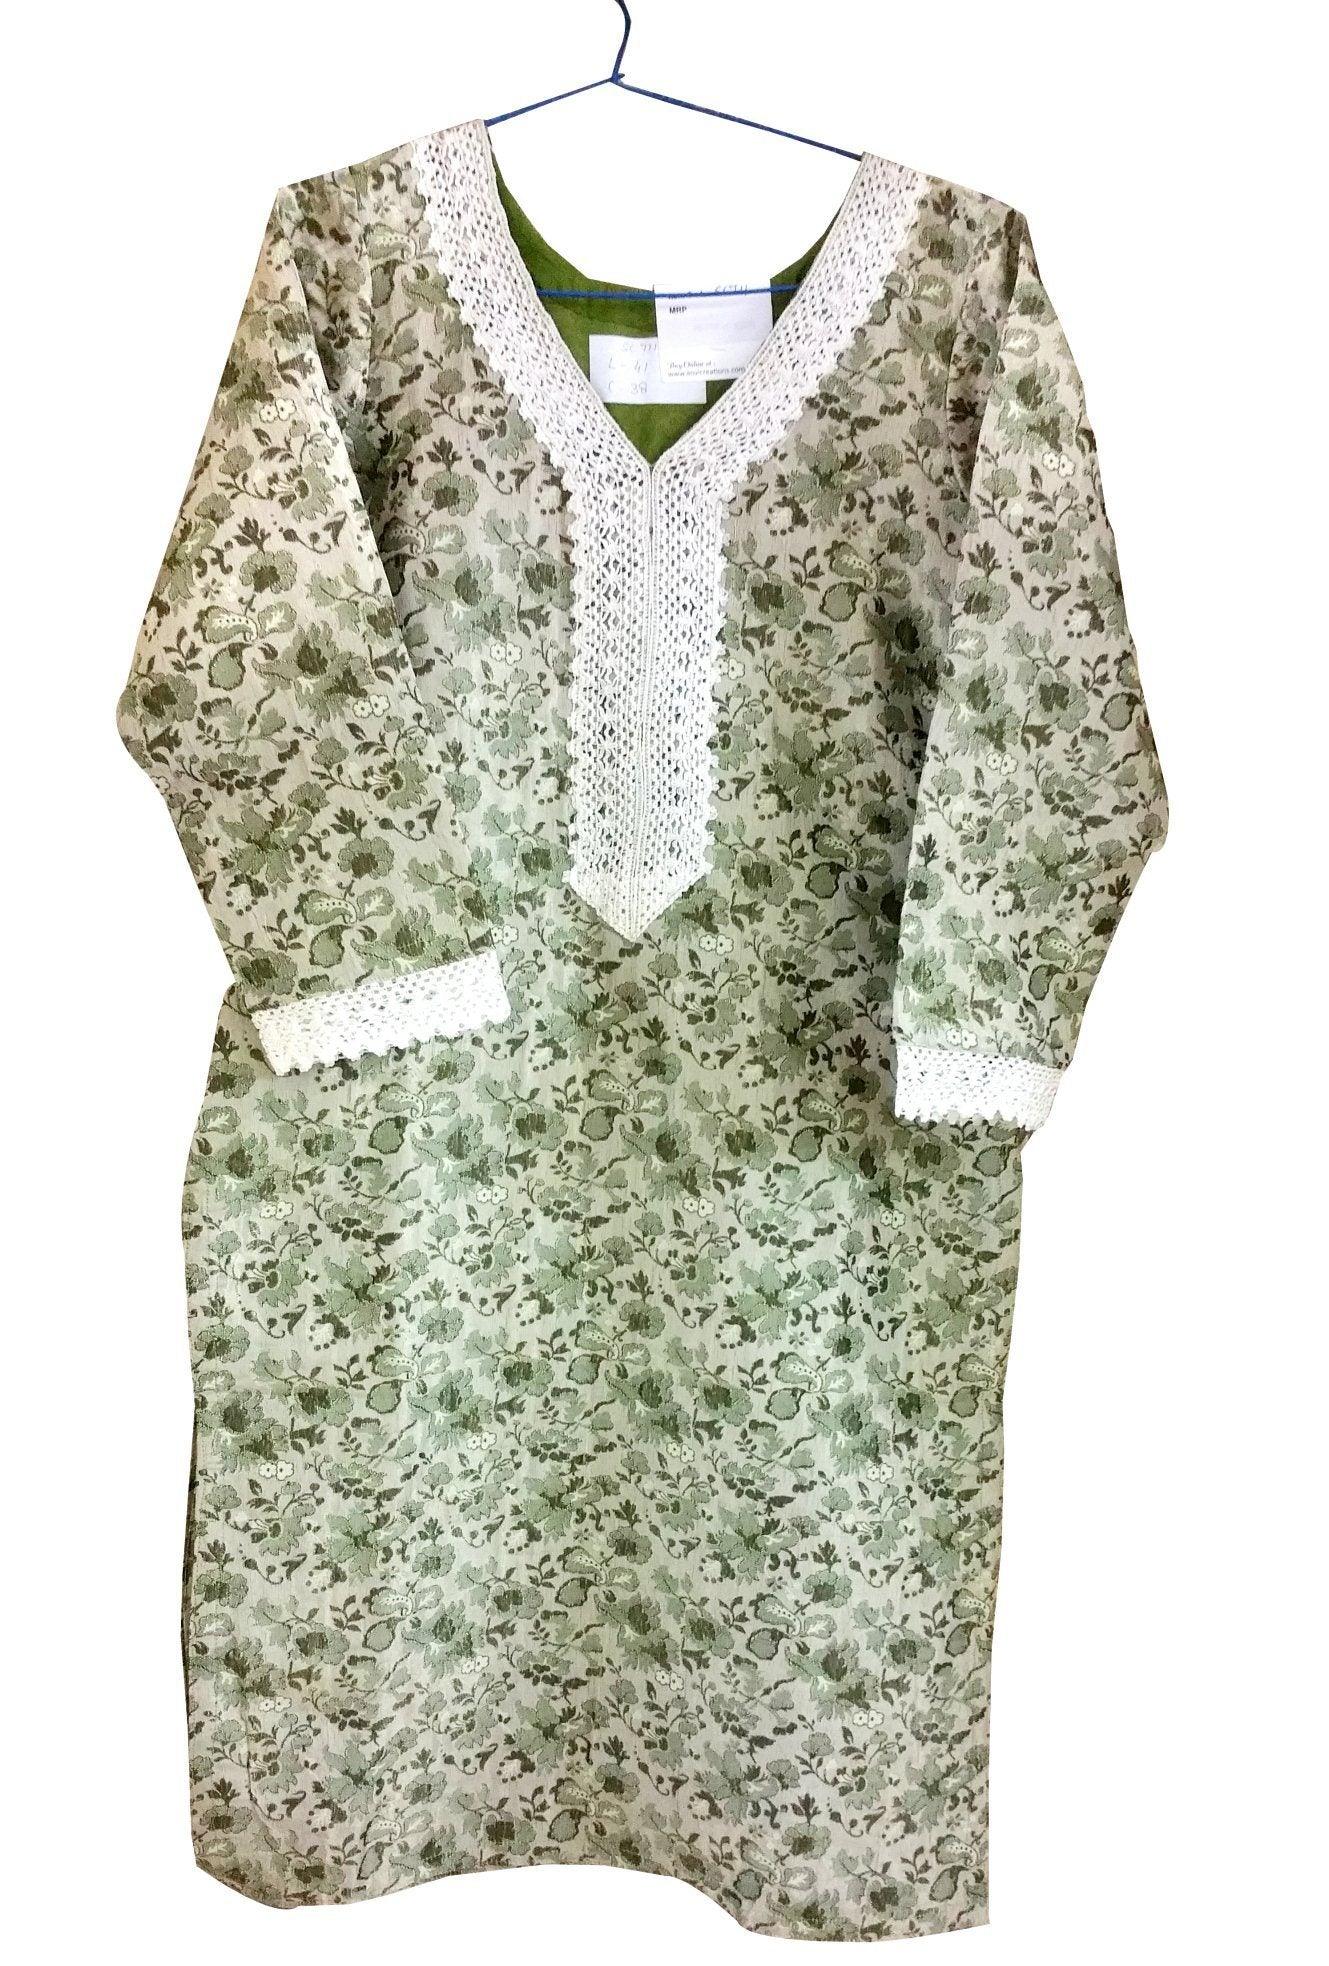 Light Green cotton Banarsi jequard Stitched Kurta Dress Size 38 SC711-Anvi Creations-Kurta,Kurti,Top,Tunic